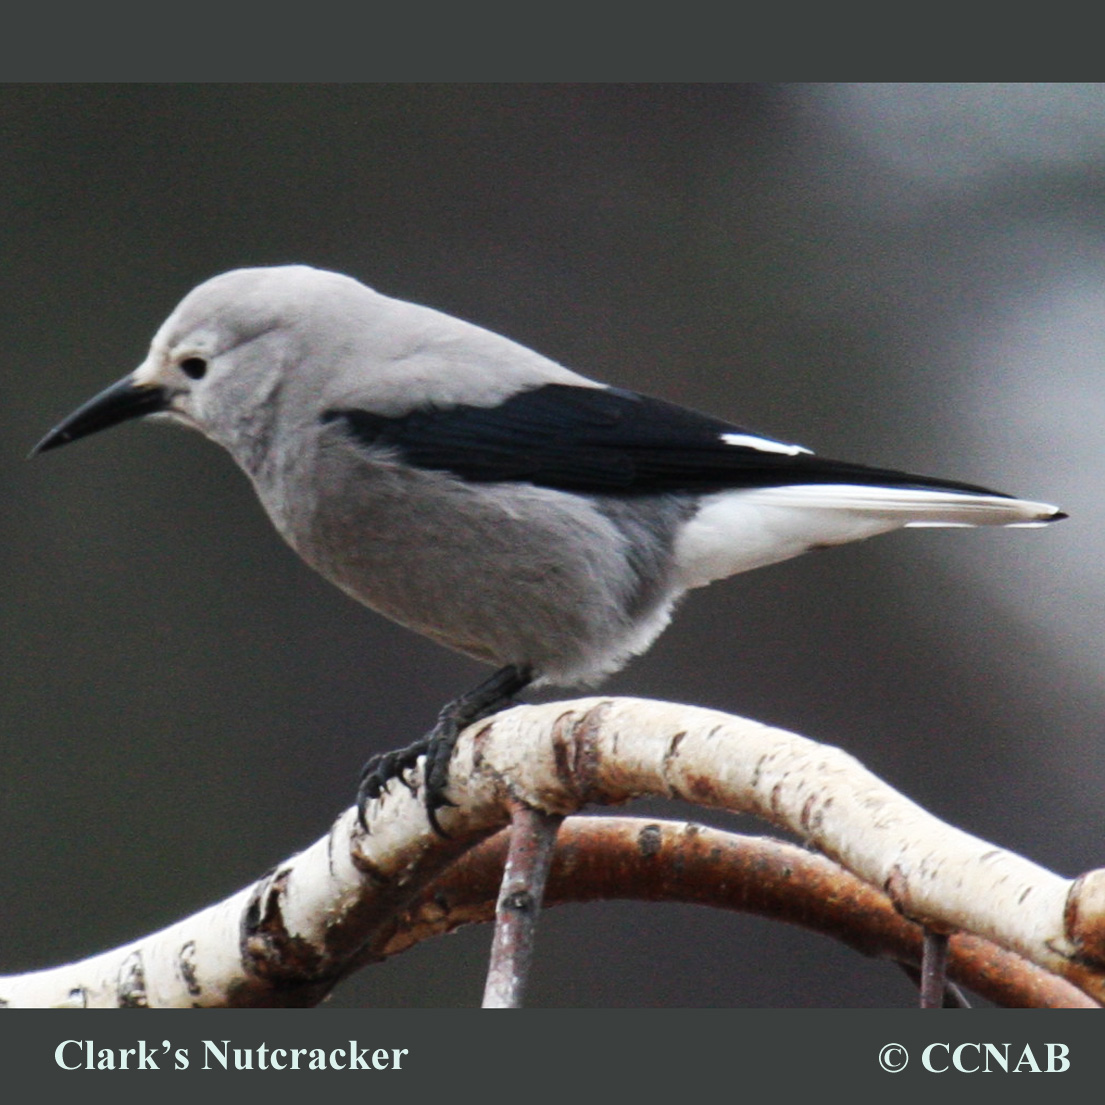 Clark's Nutcracker